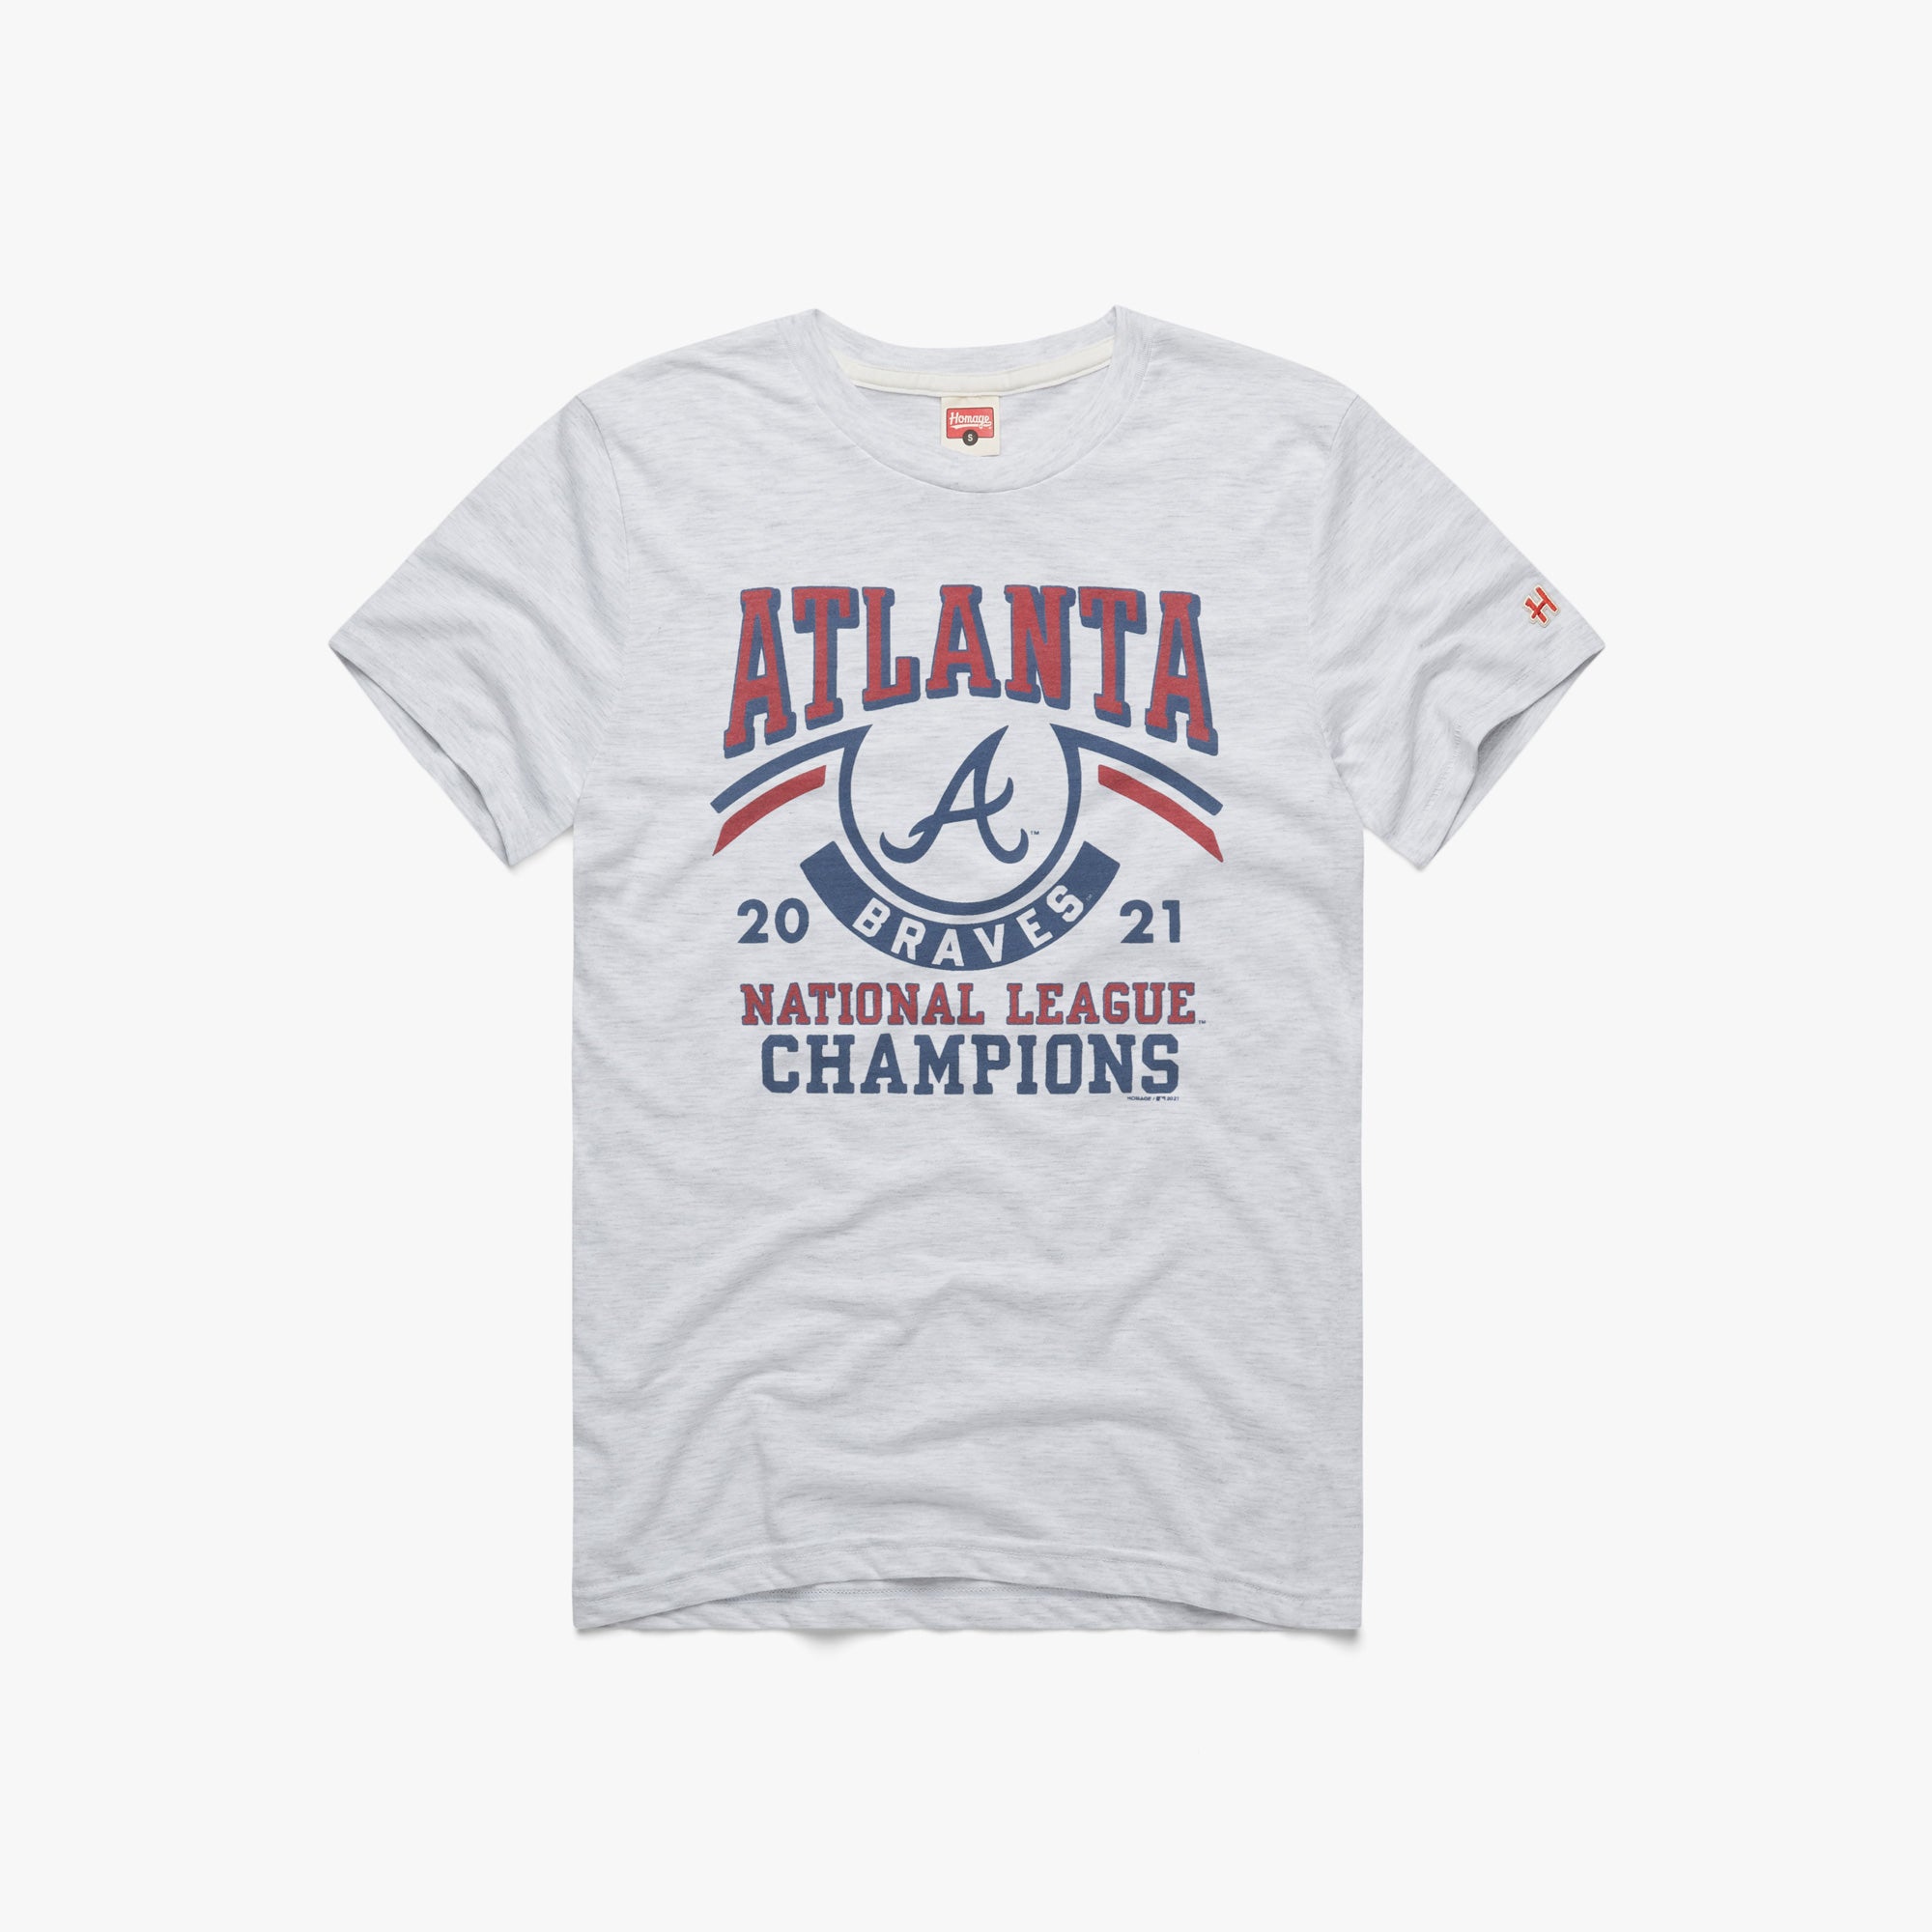 Atlanta Braves Jersey By Starter XL (Fits Smaller) (X)